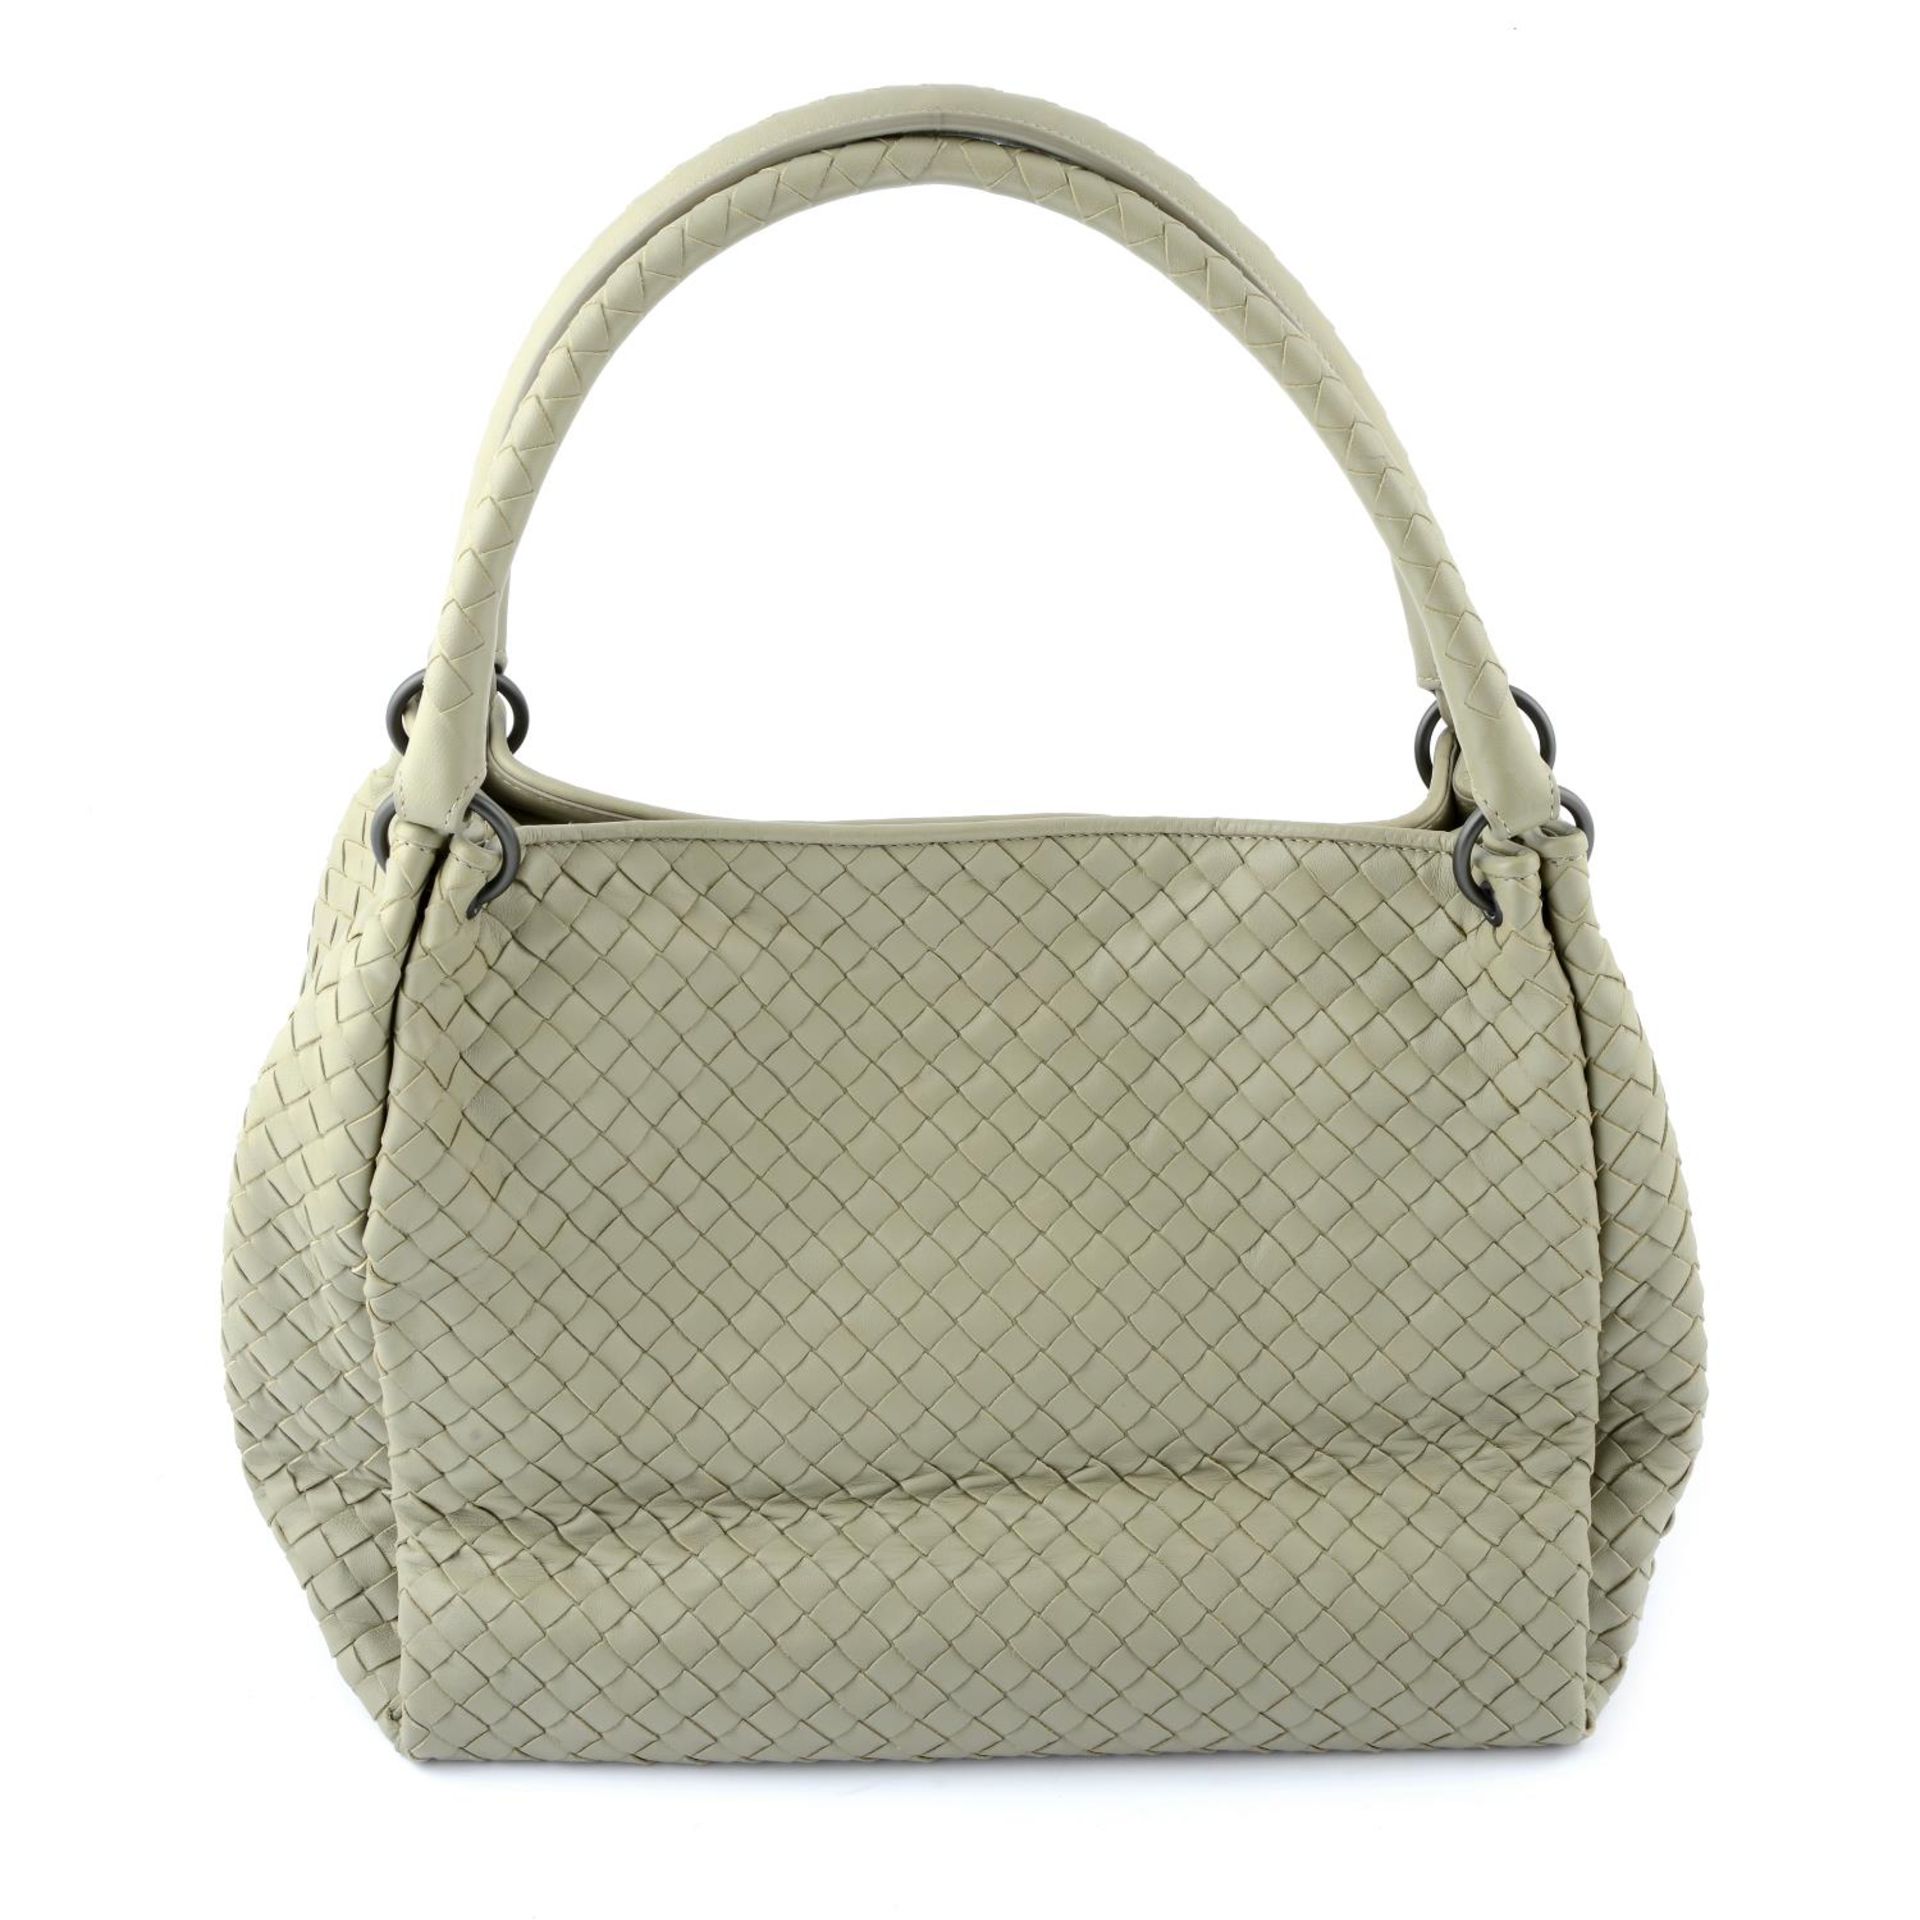 BOTTEGA VENETA - an Intrecciato top handle handbag. - Image 2 of 5